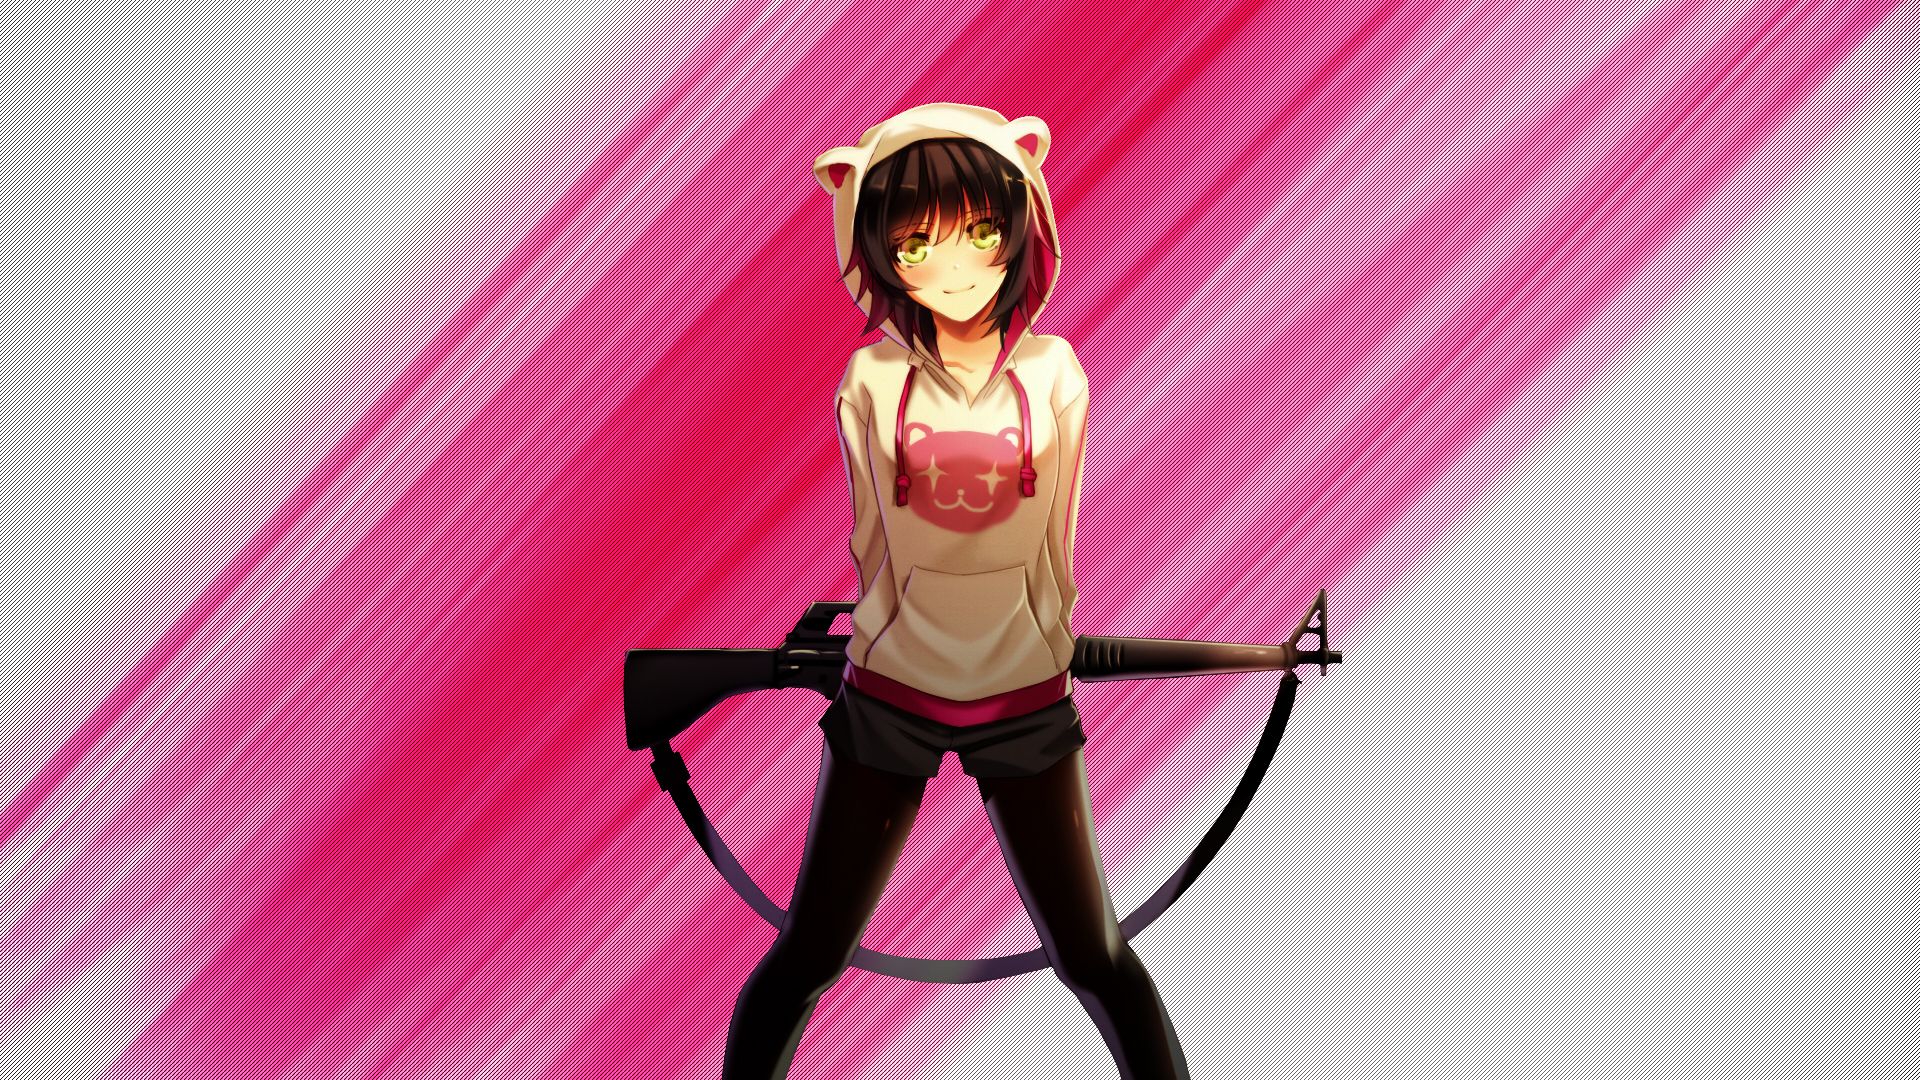 Cute Anime Girl In Hoodie With Gun HD Wallpaperx1080